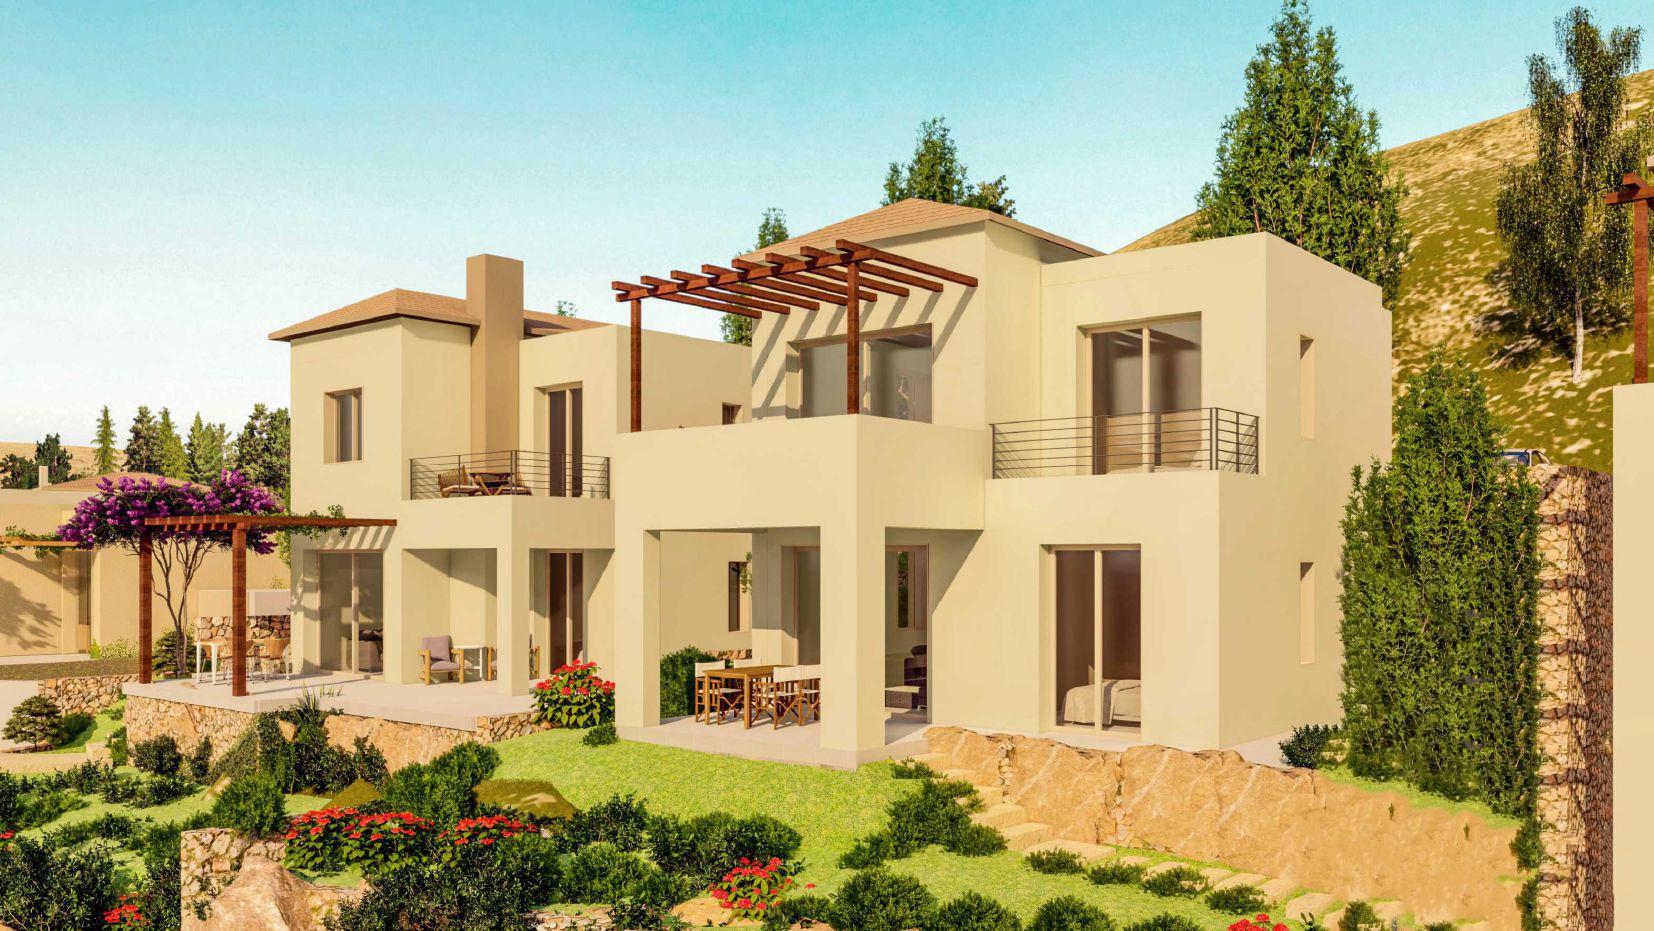 Off-plan Villas for sale in Chania, Greece